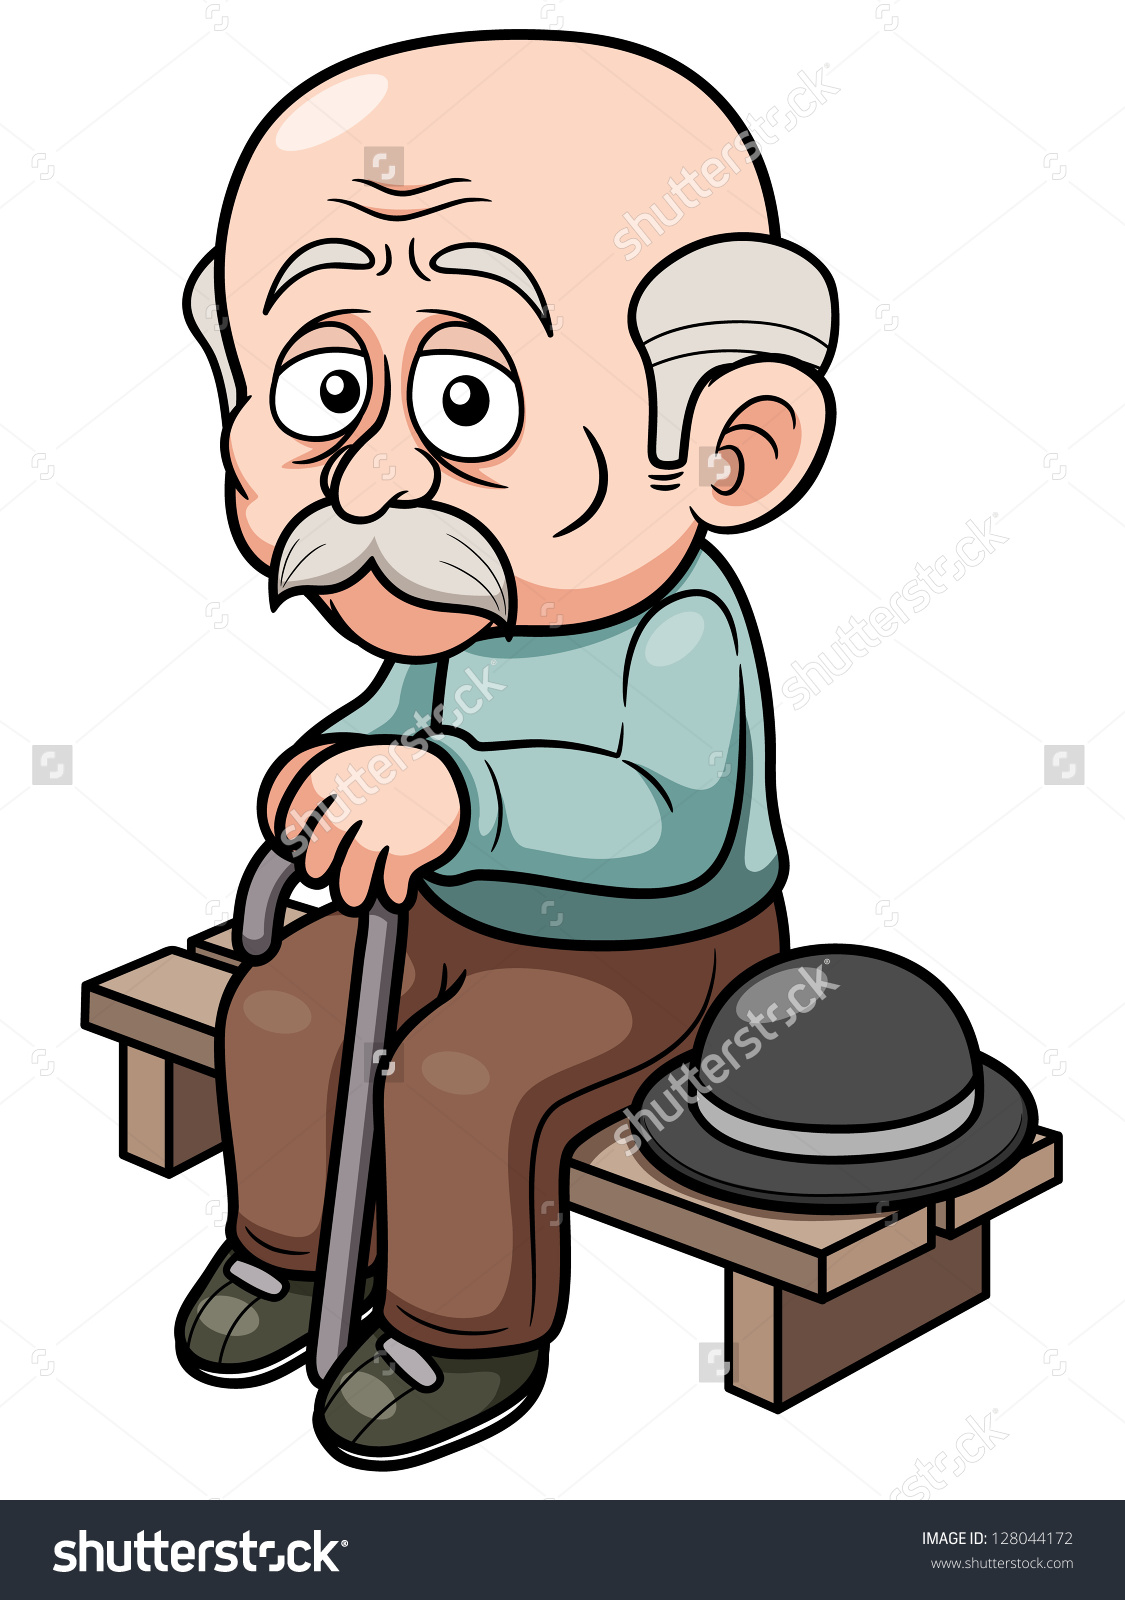 Old Man Cartoon Images : Old Man Cartoon Stock Images, Royalty-free ...